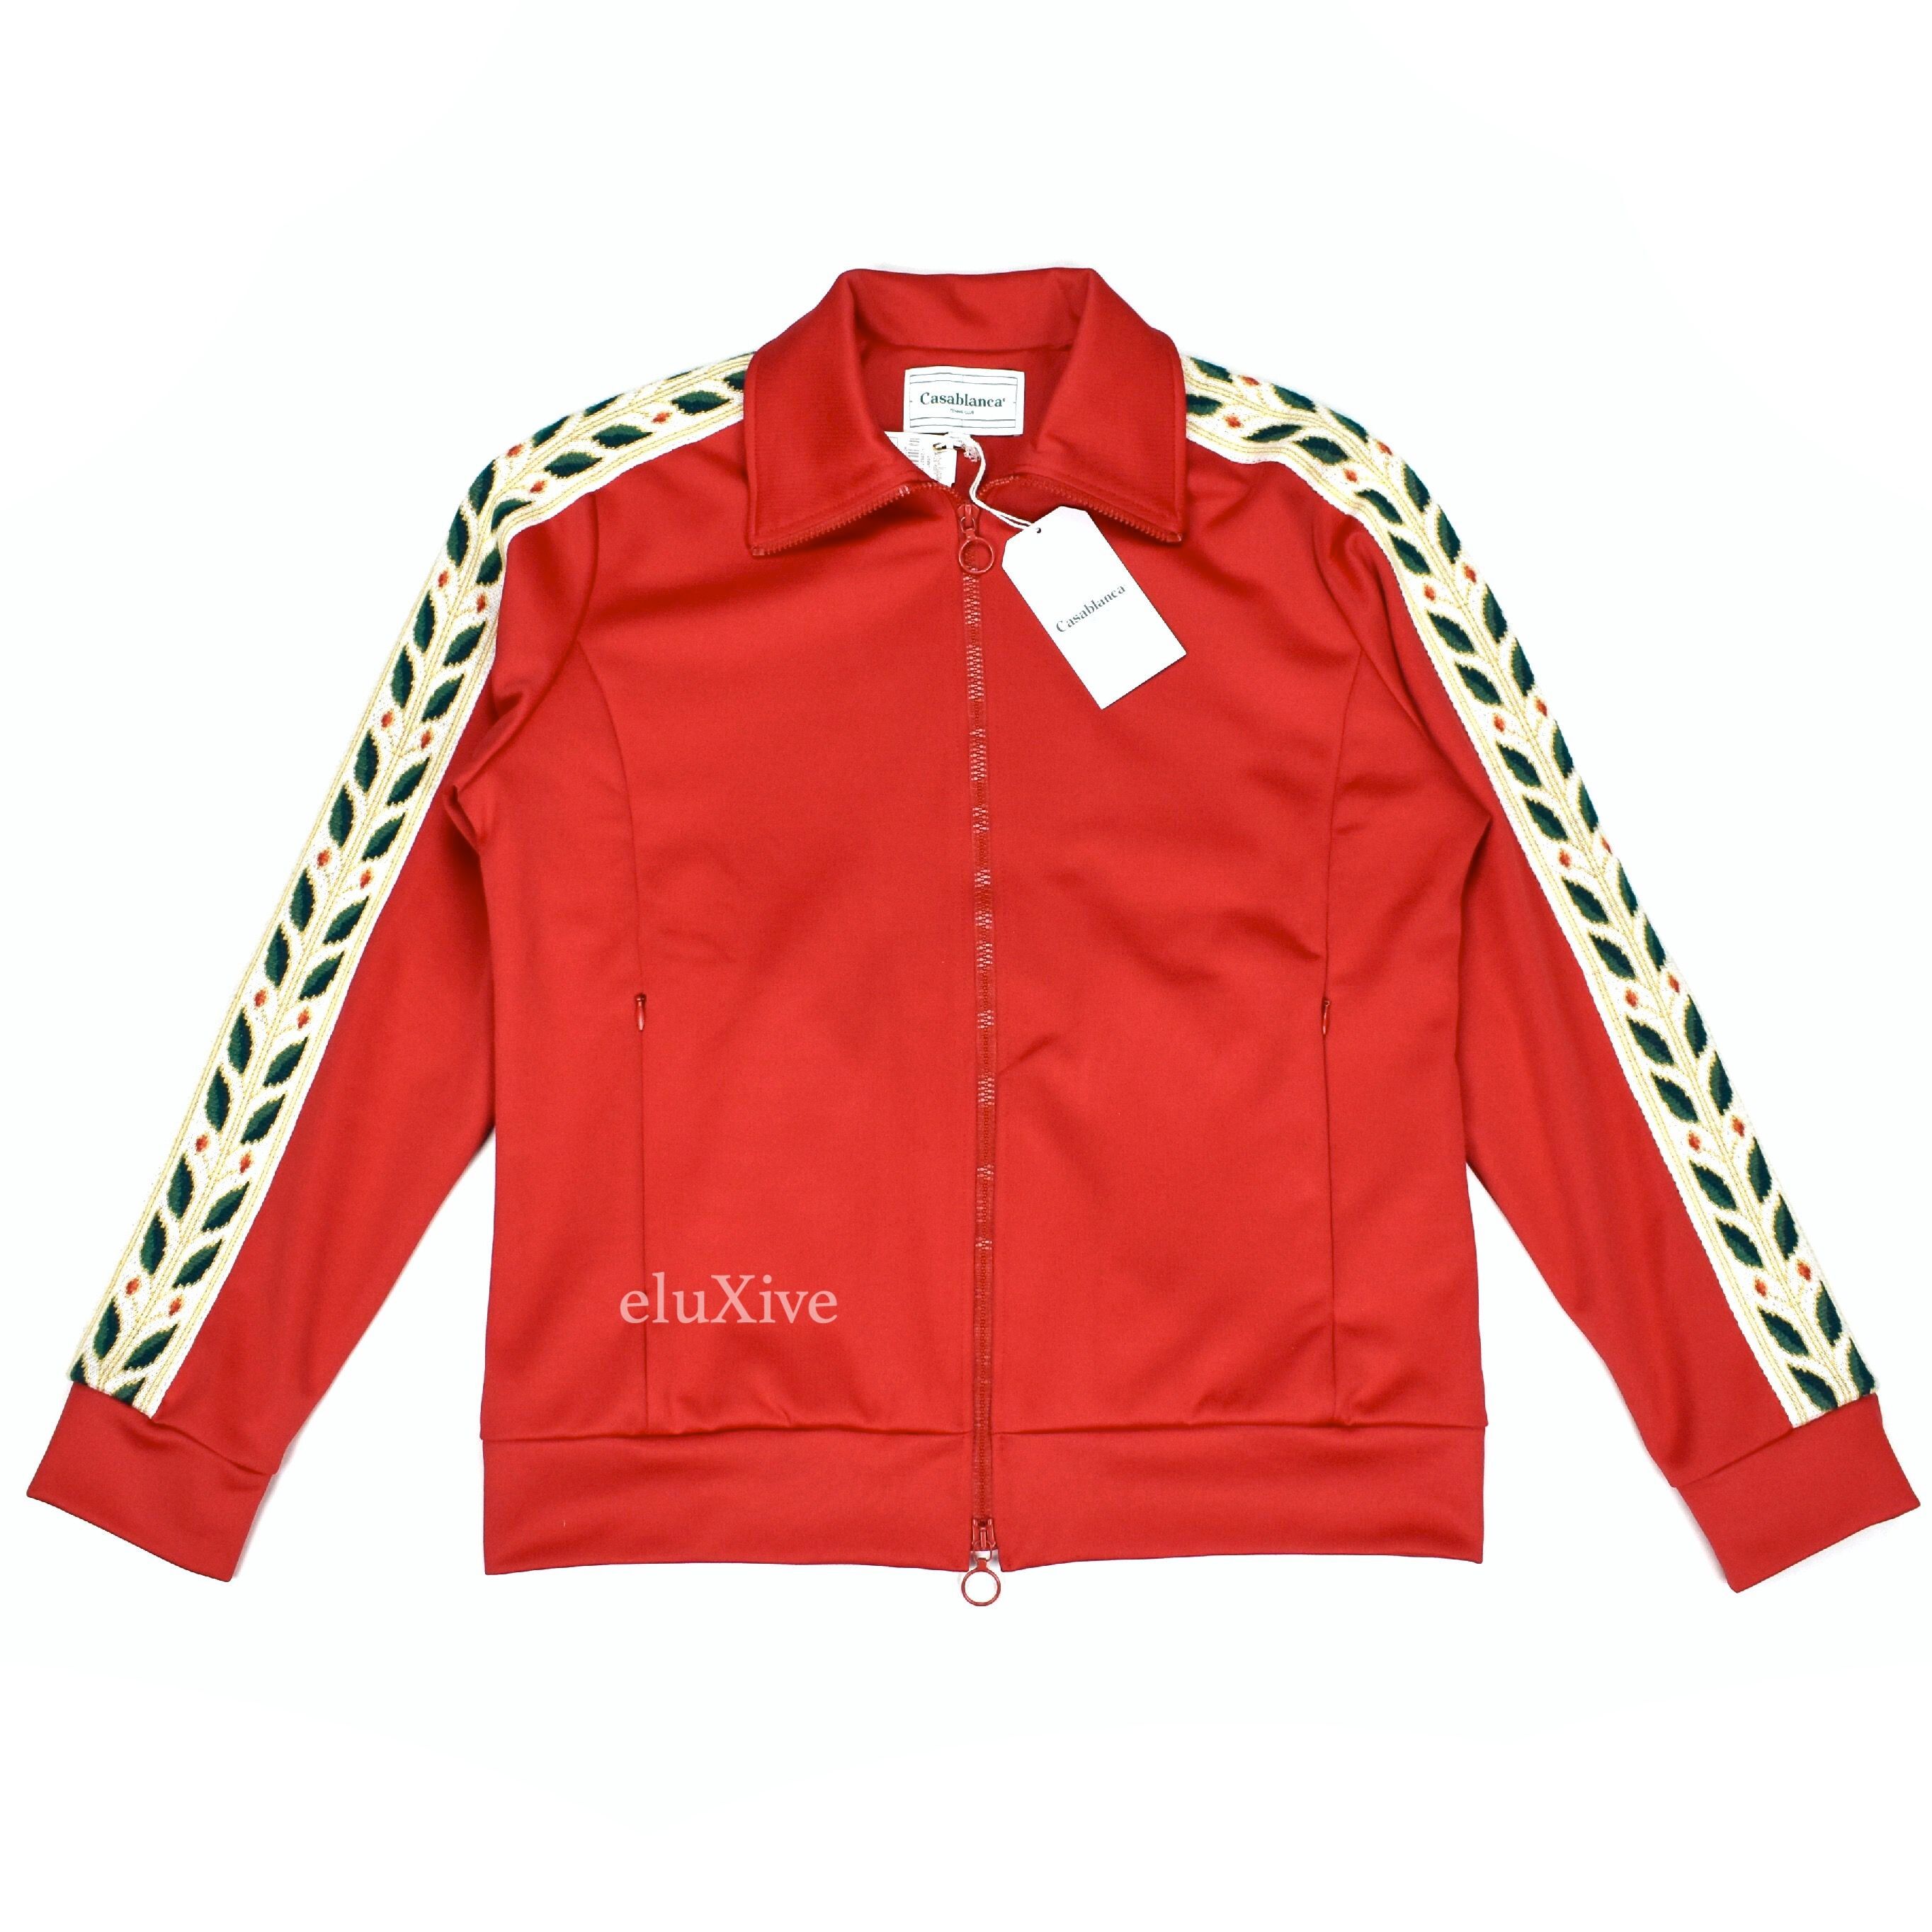 Casablanca Casablanca Red Laurel Stripe Track Jacket NWT Size US M / EU 48-50 / 2 - 1 Preview